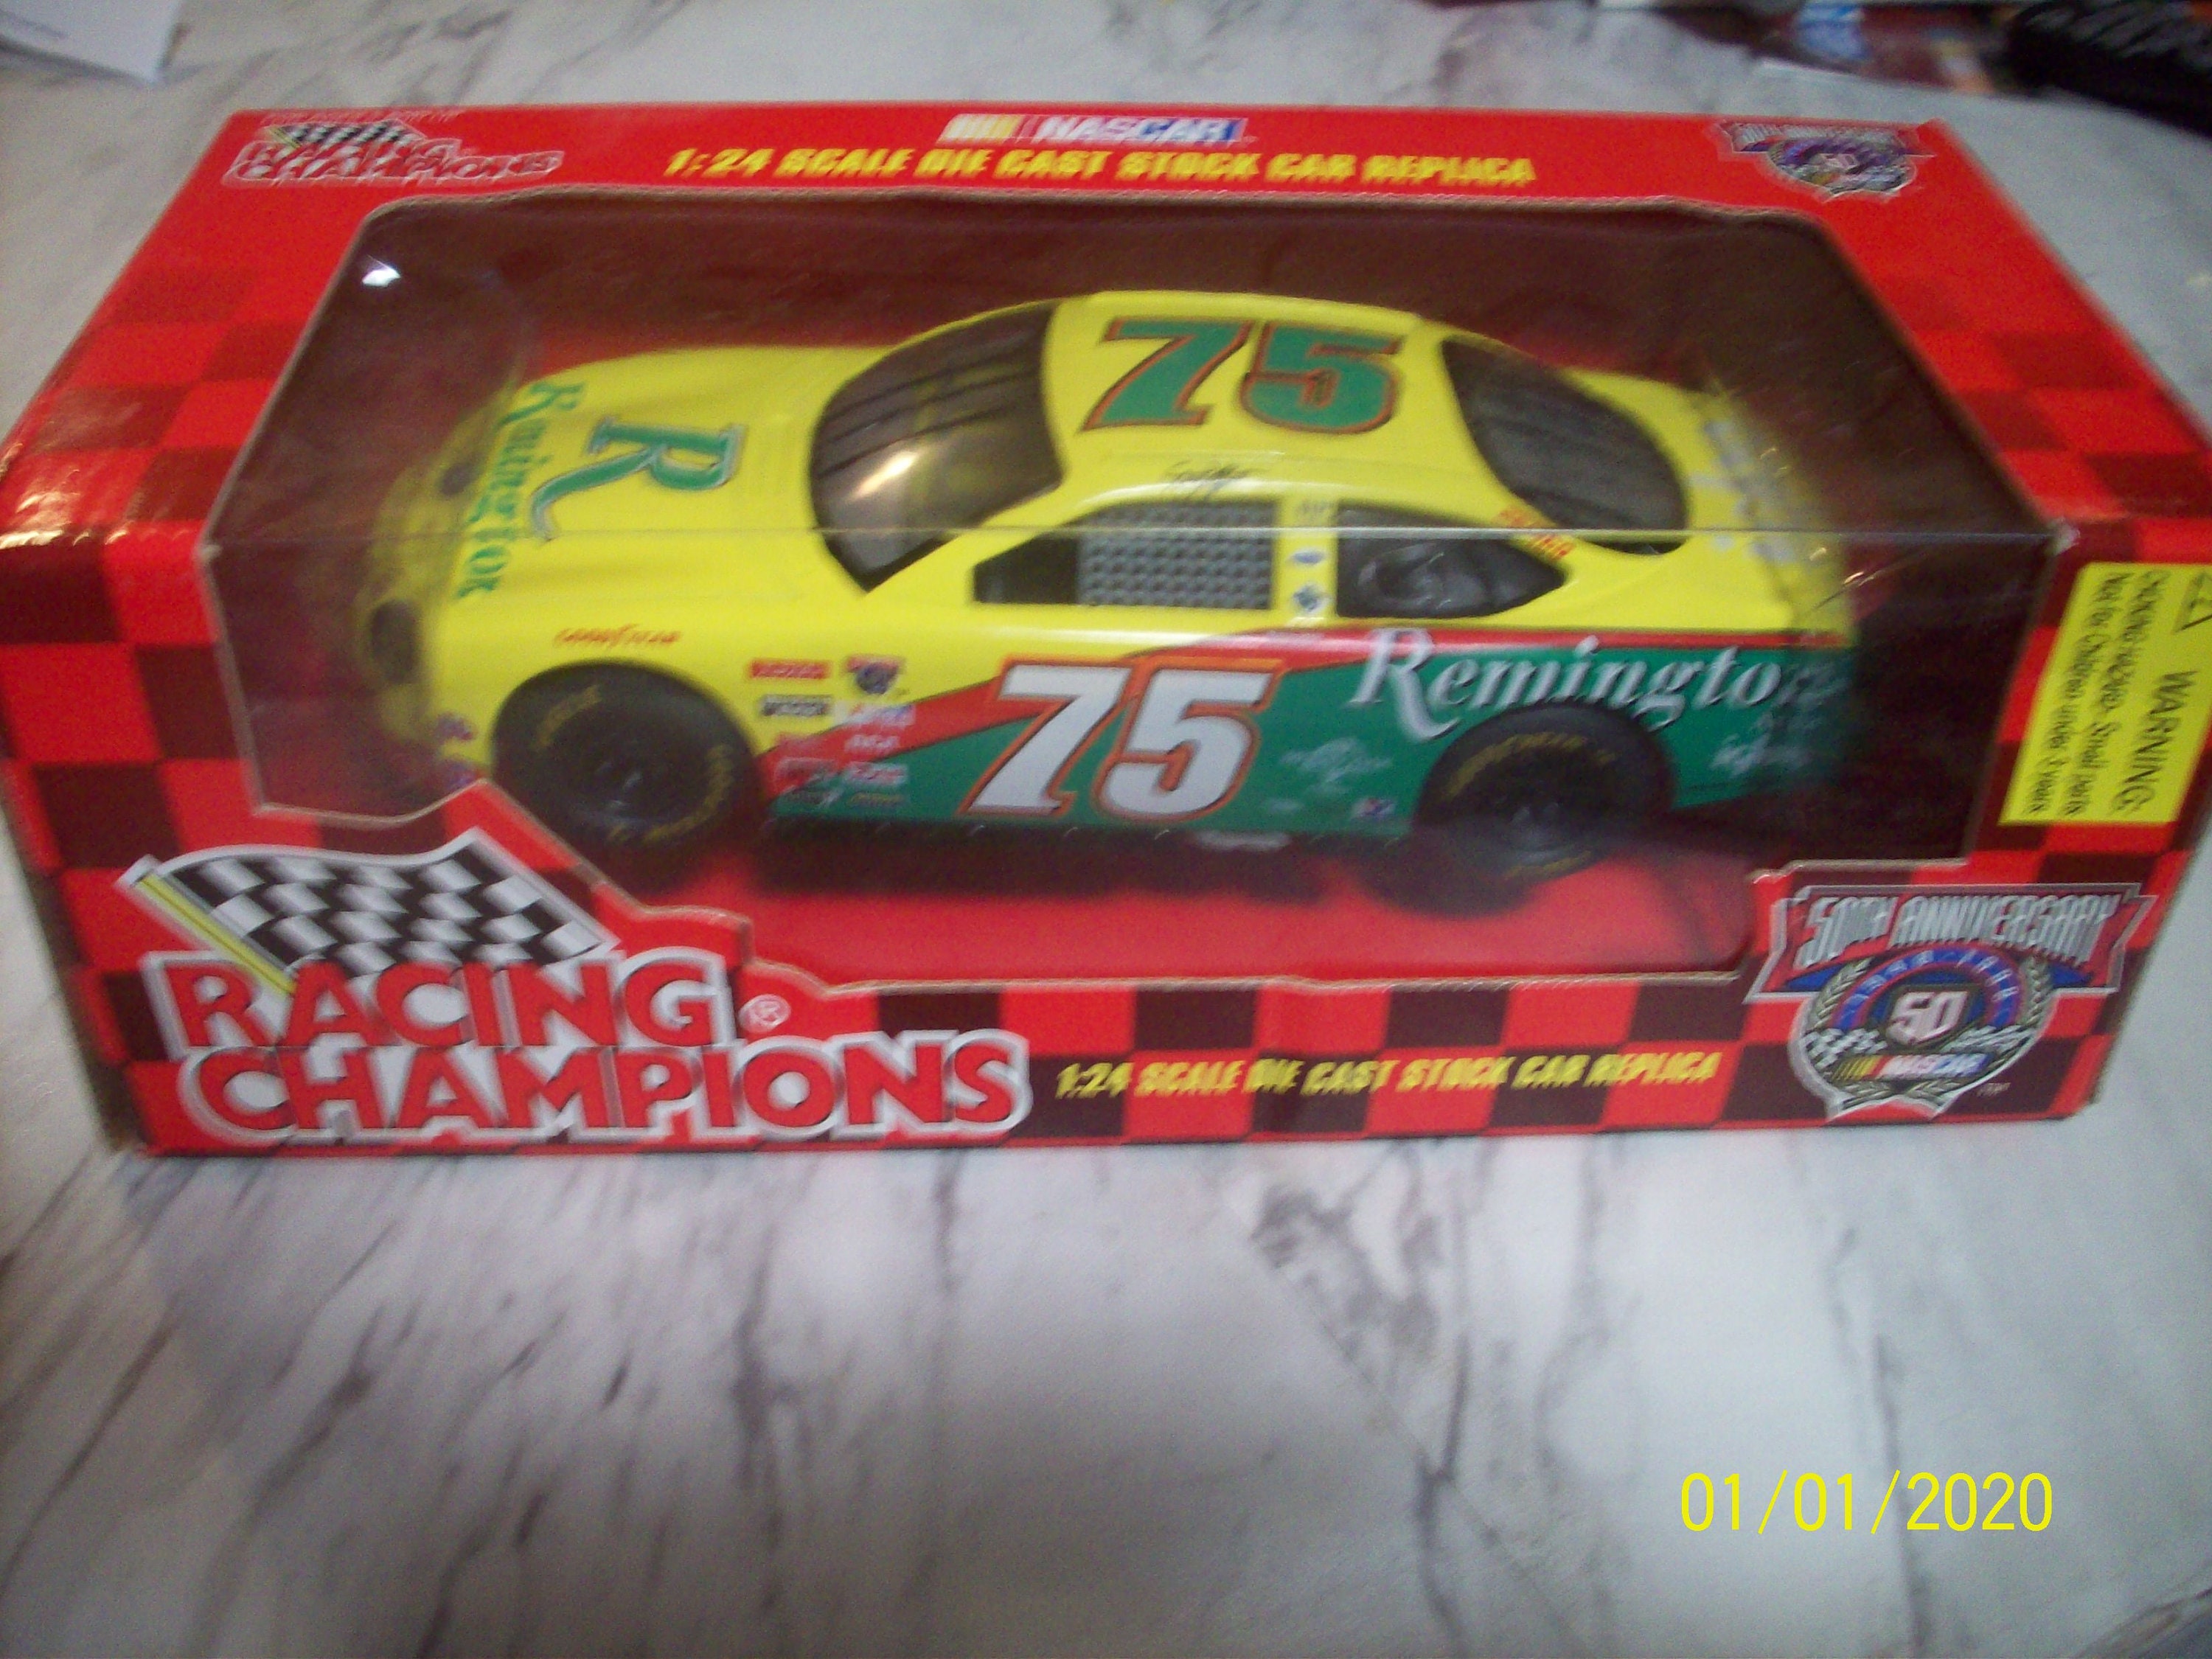 Racing Champions NASCAR 50th Anniversary Stock Rods 1:24 Remington Rick Mast 75 